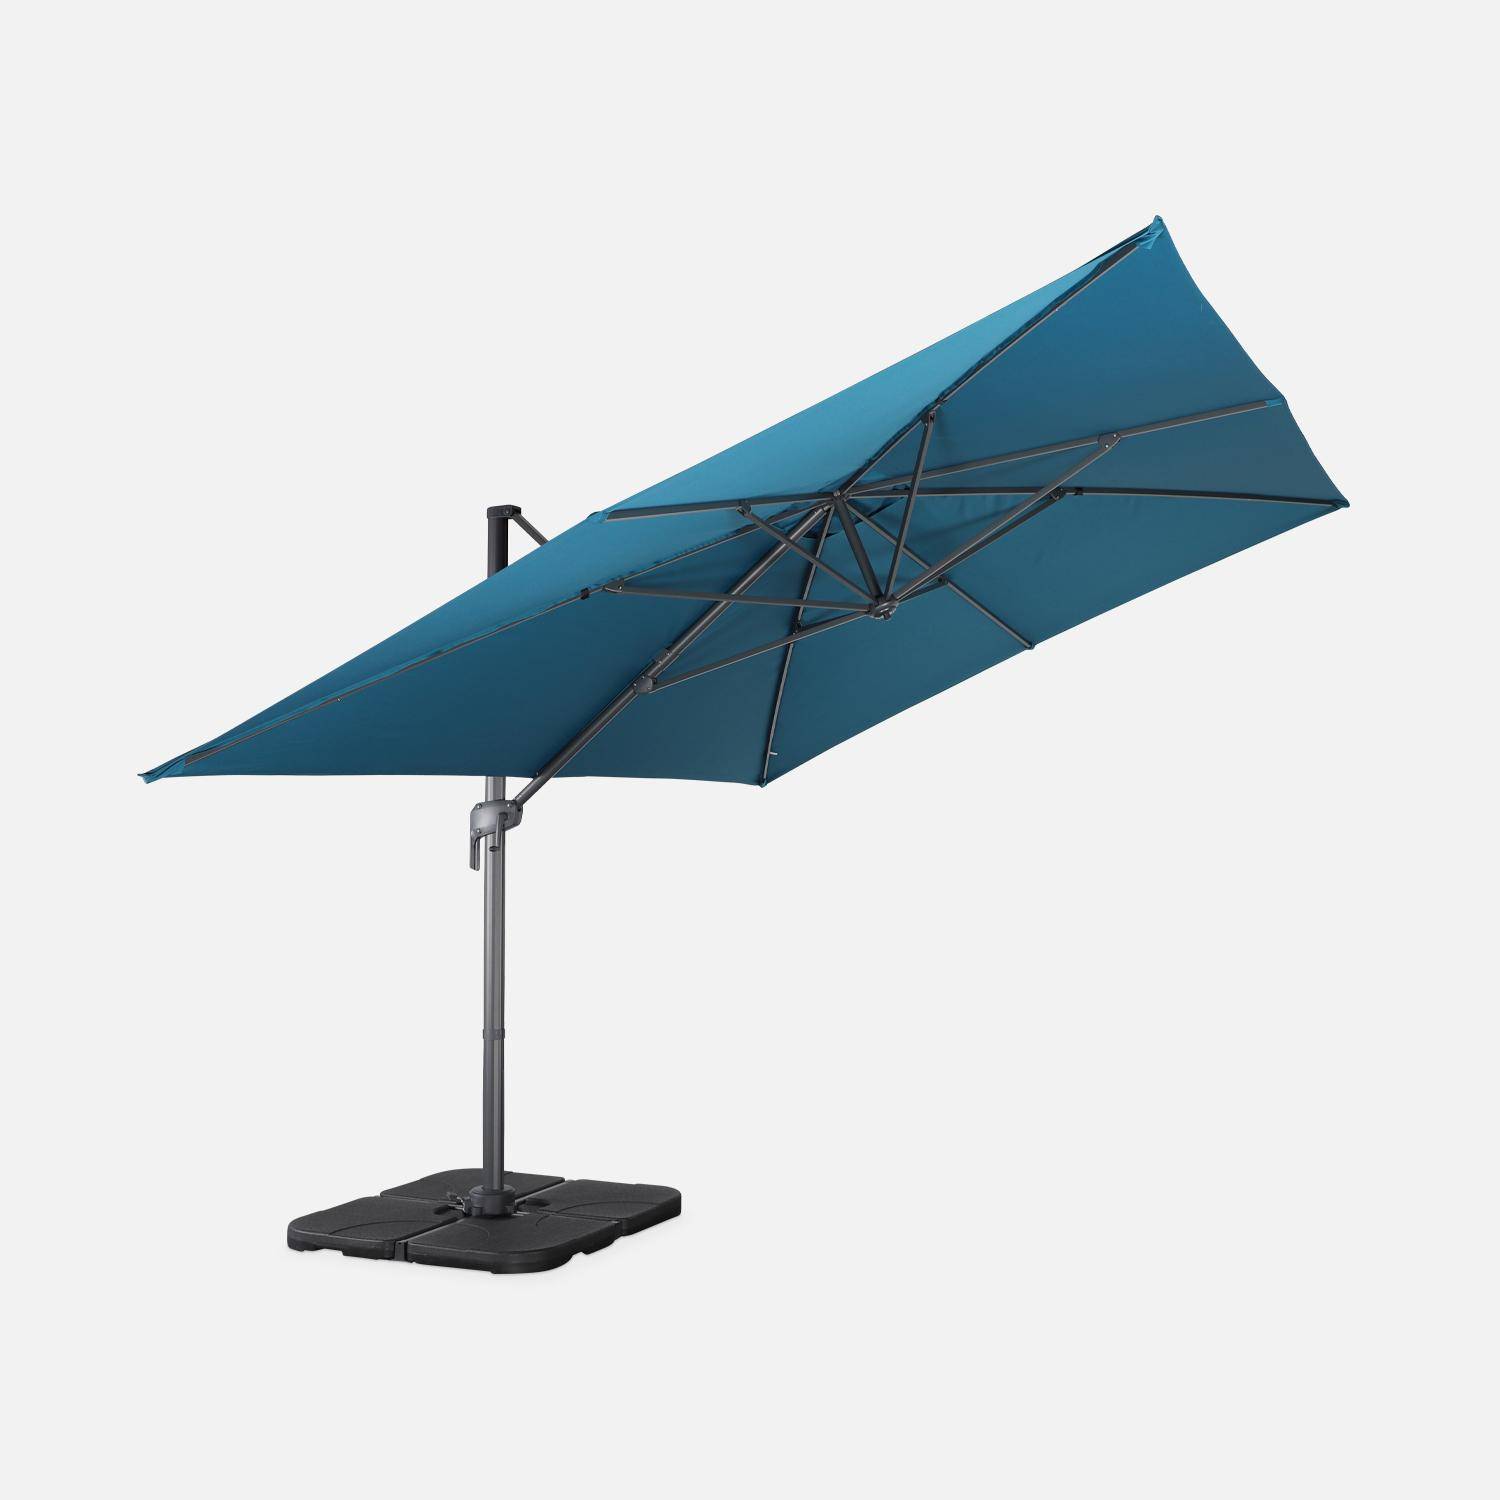 Rechthoekige parasol 3 x 4 m - Antibes - groenblauw-  Offset parasol, kantelbaar, opvouwbaar en 360° draaibaar. Photo3